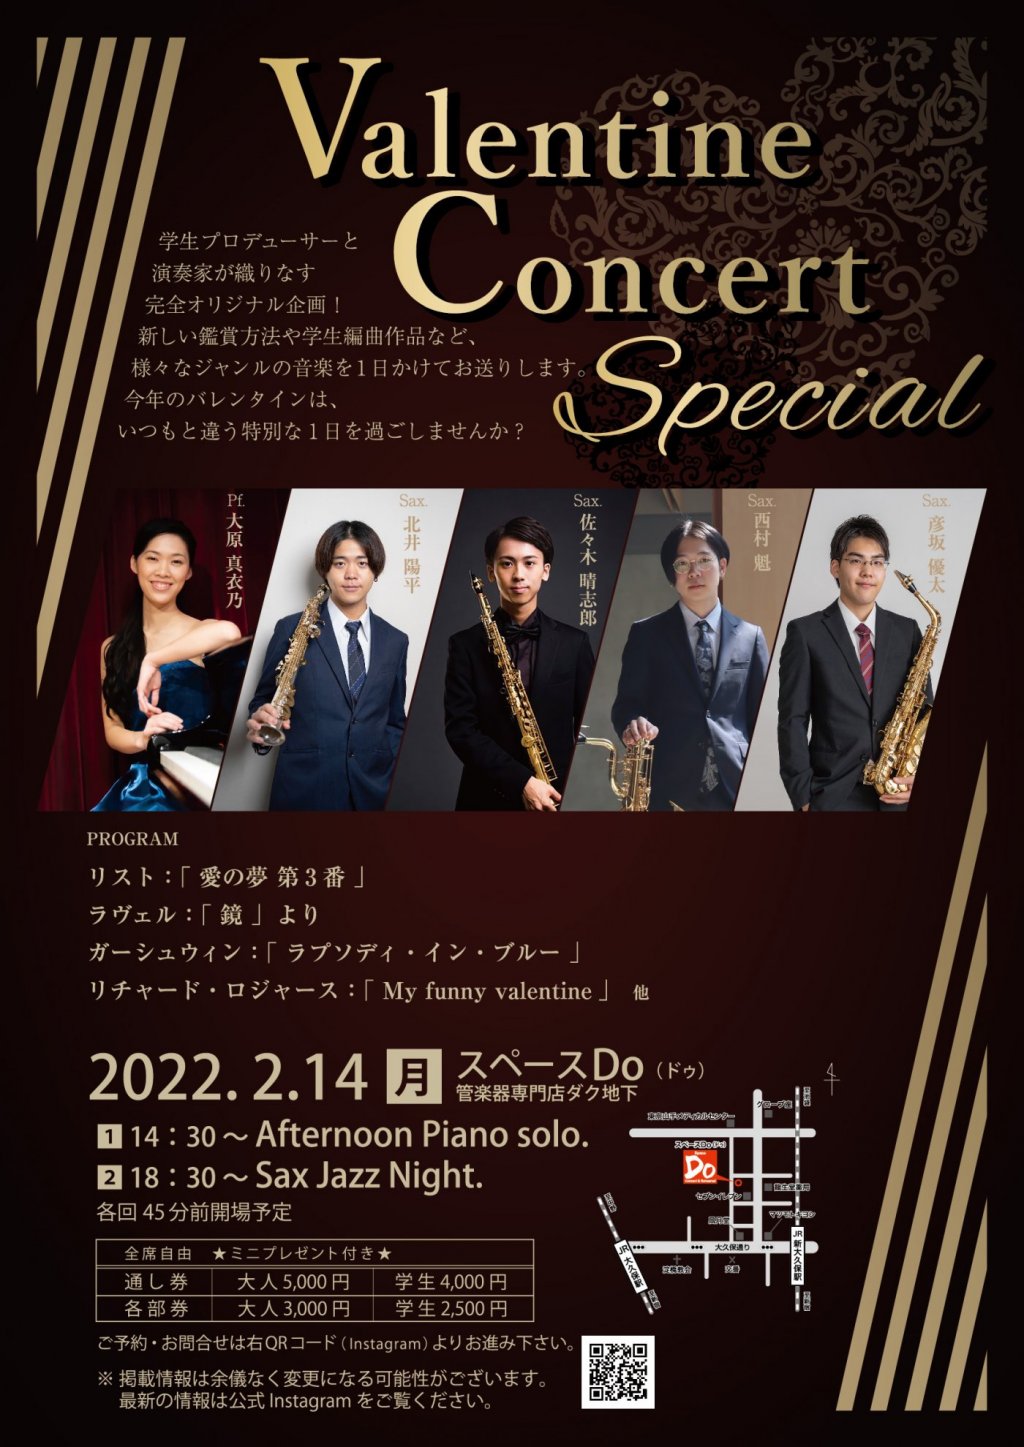 Valentine Concert Special